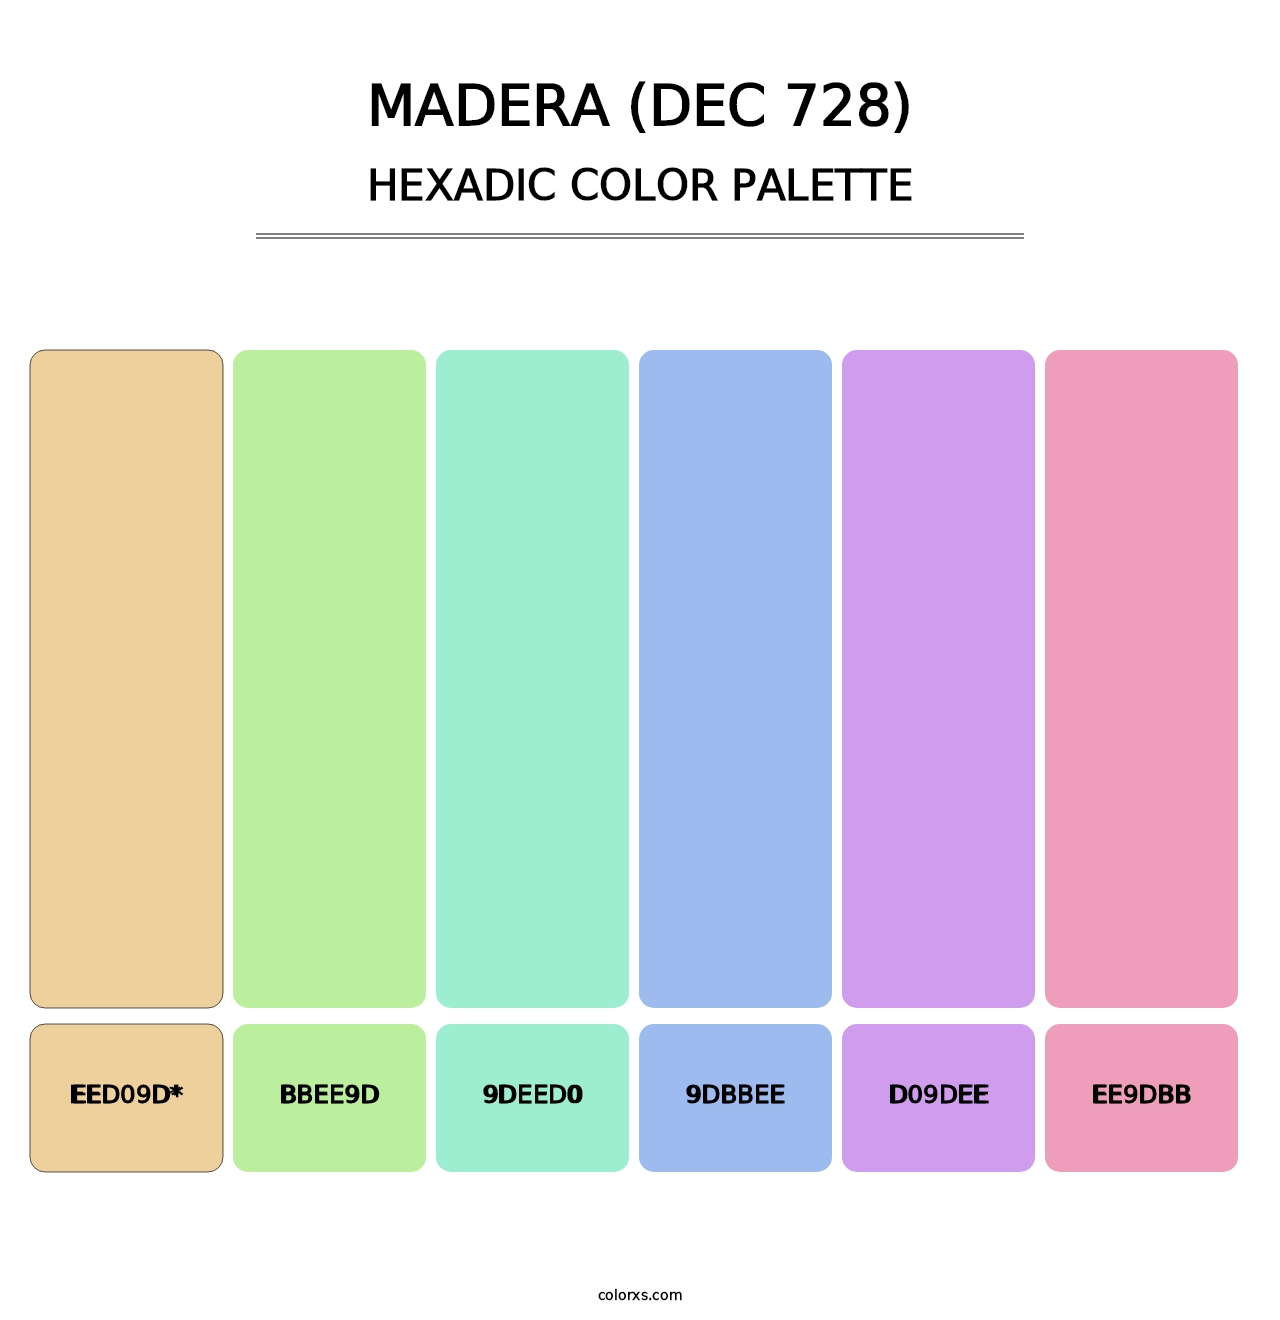 Madera (DEC 728) - Hexadic Color Palette